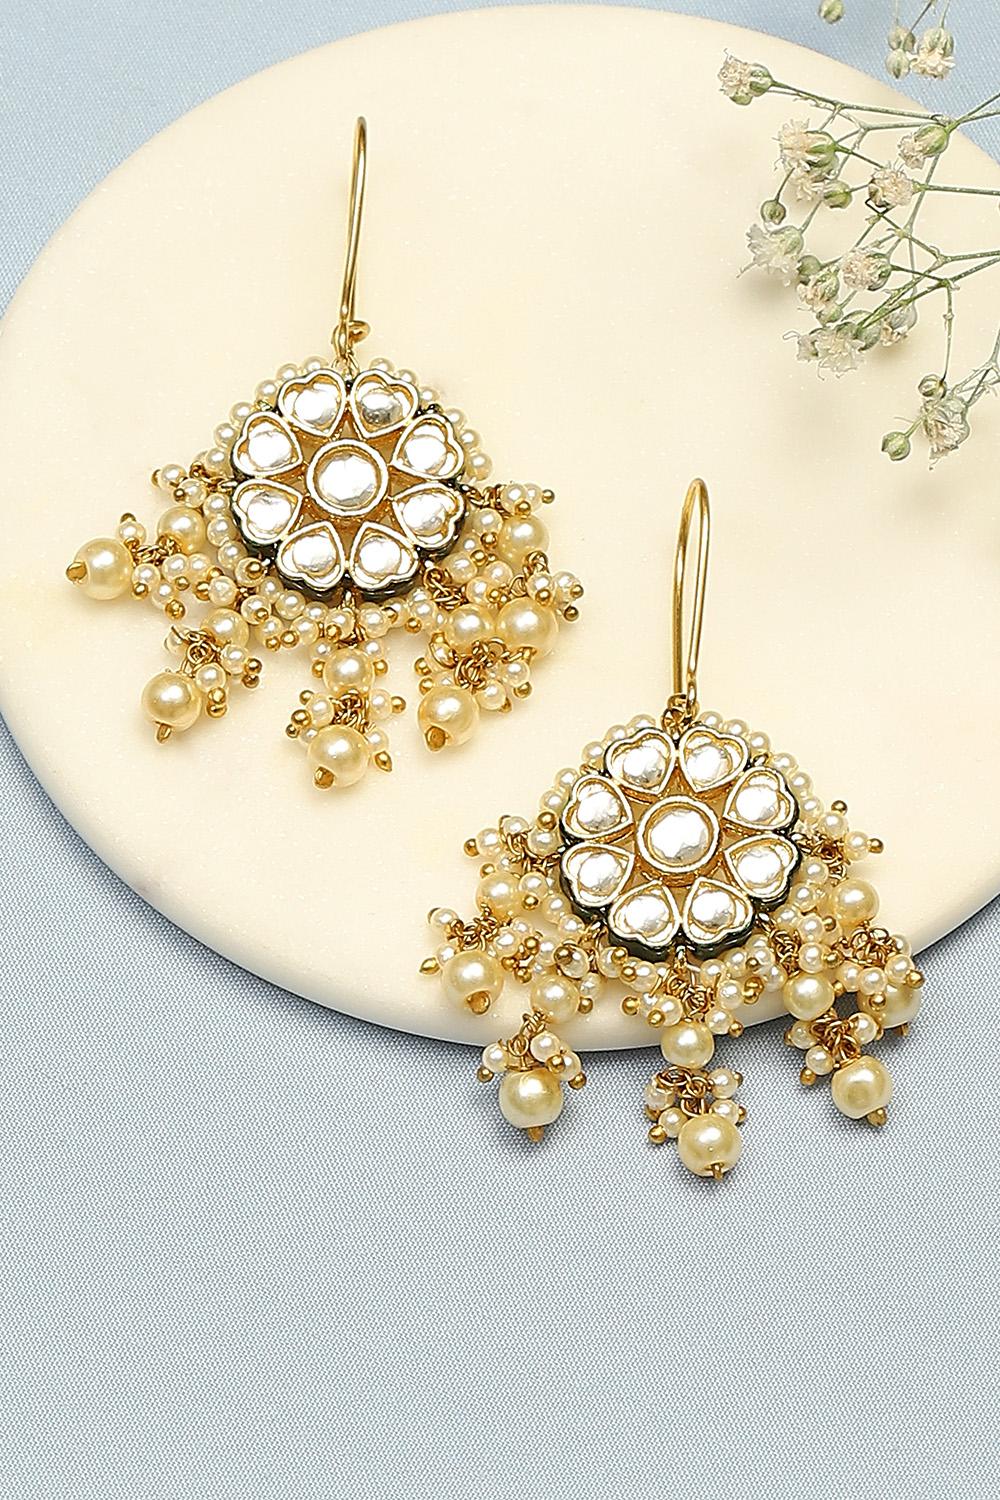 Buy online Pearl Earrings for women at best price at biba.in ...